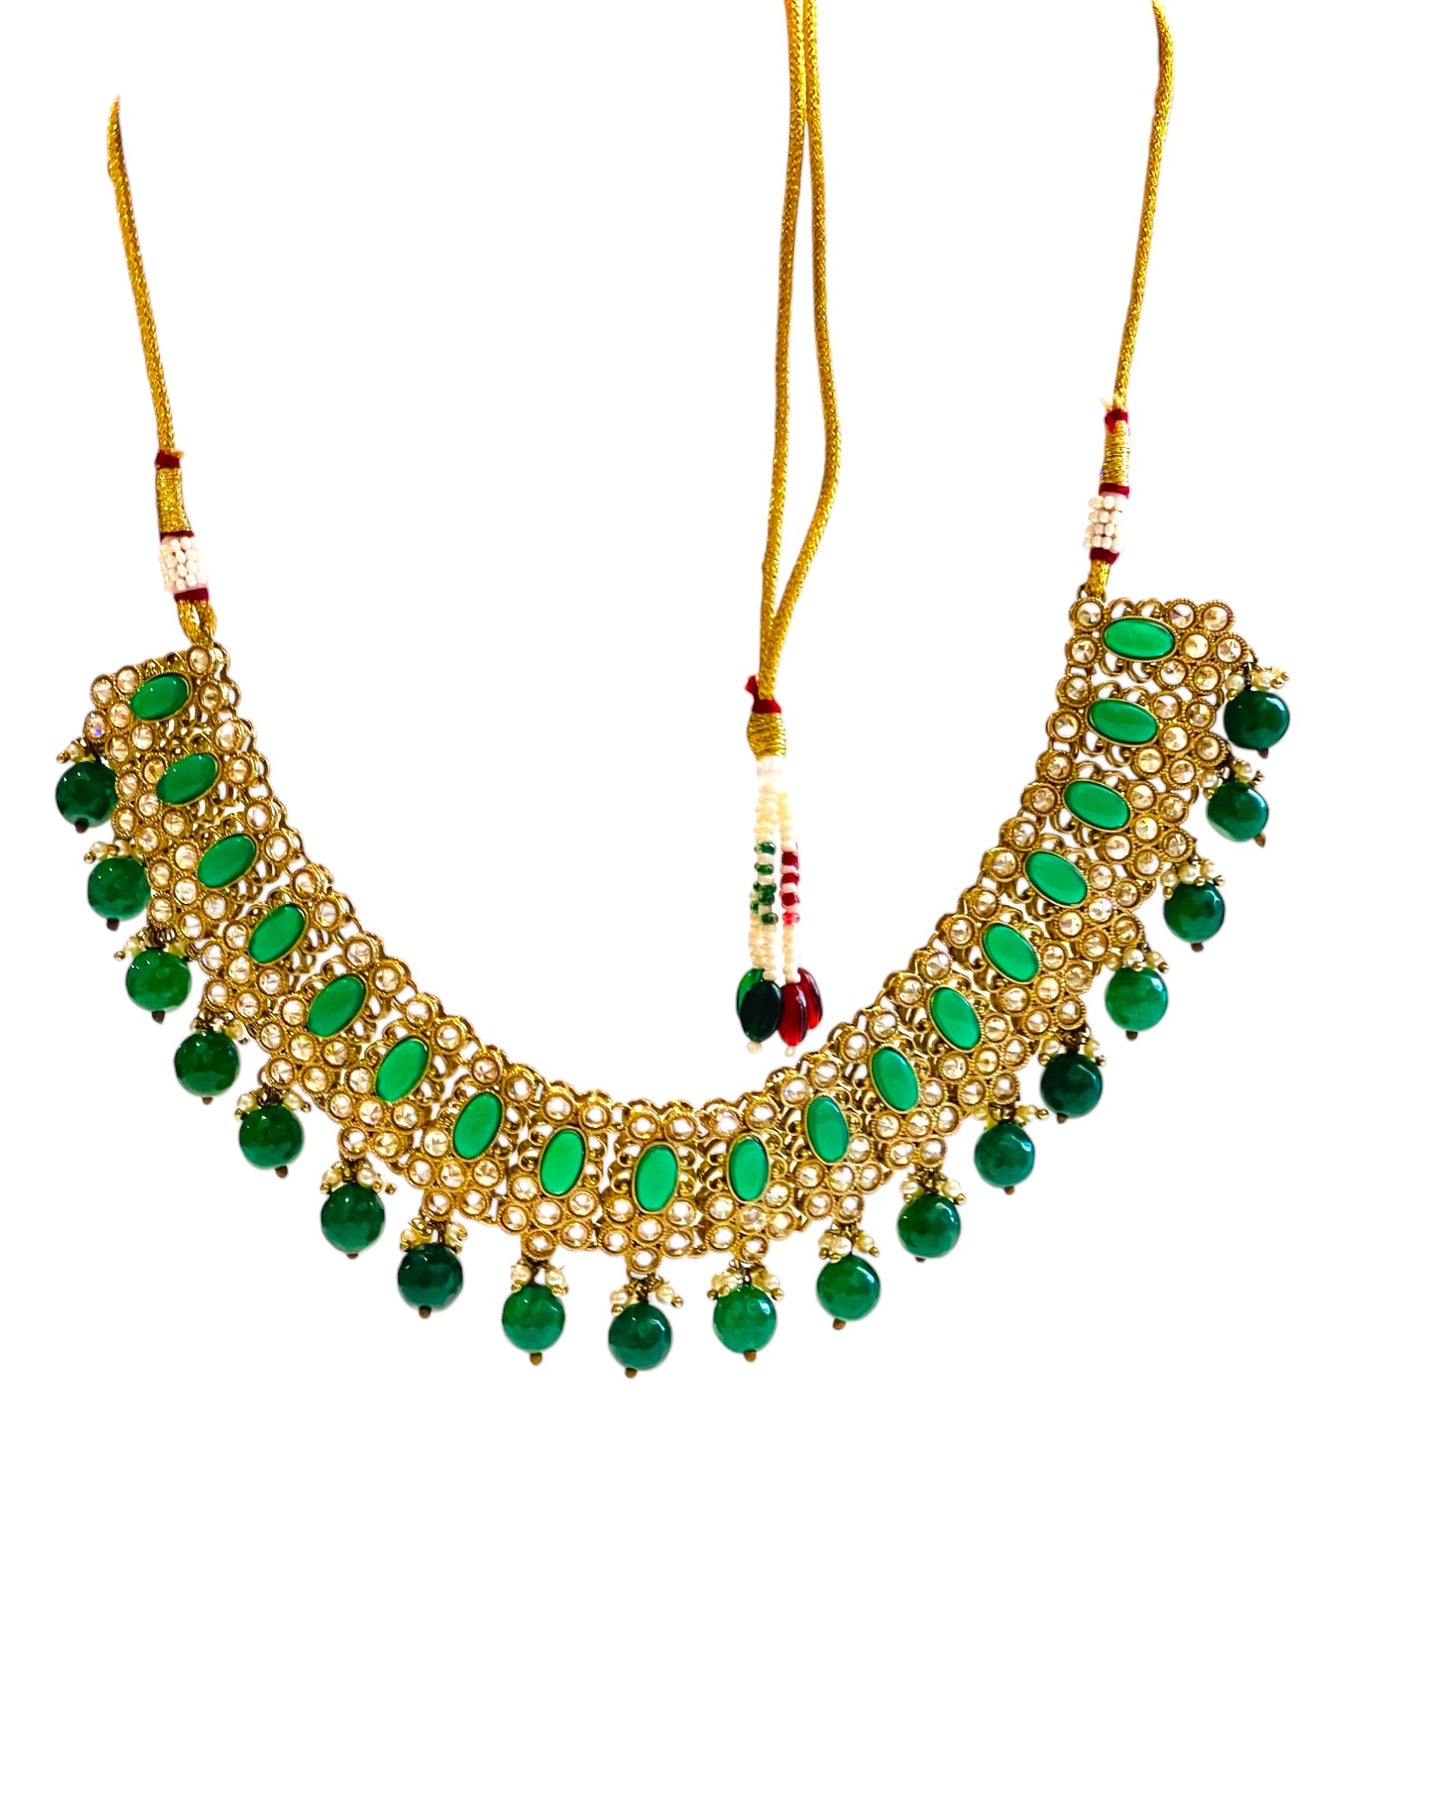 Elegant Gold and Green Jewelry Set